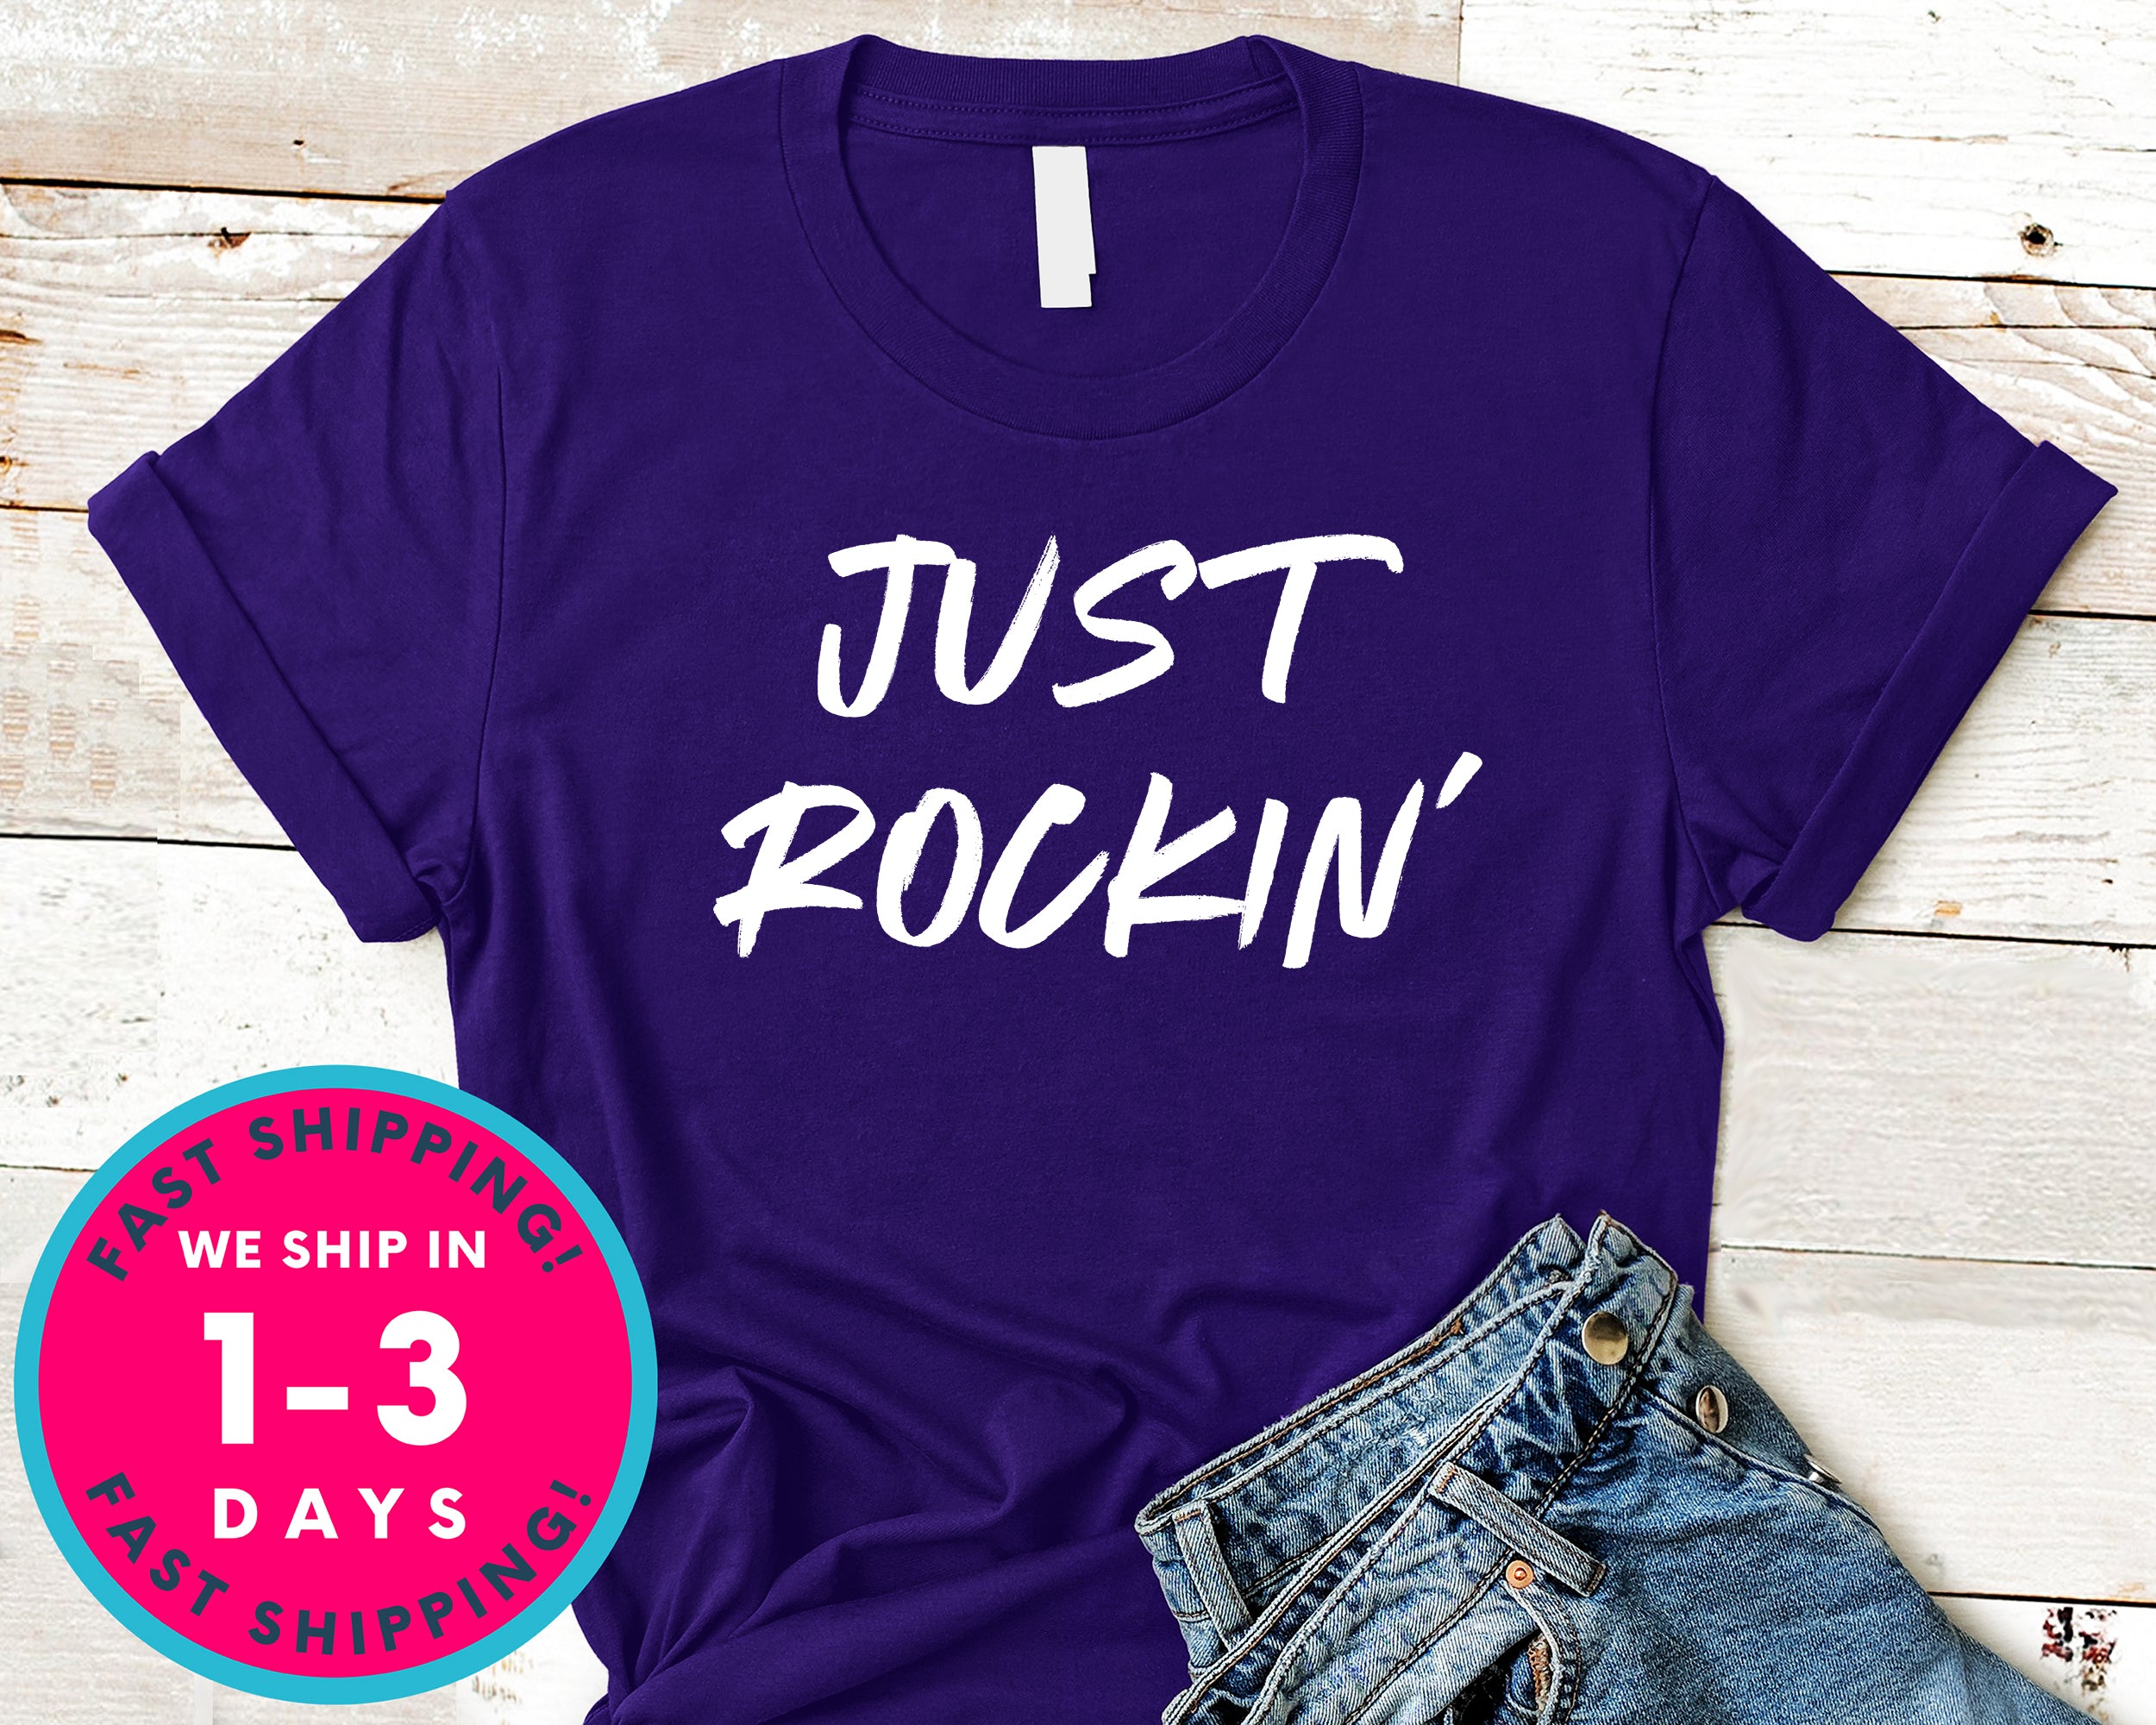 Just Rocking T-Shirt - Inspirational Quotes Saying Shirt